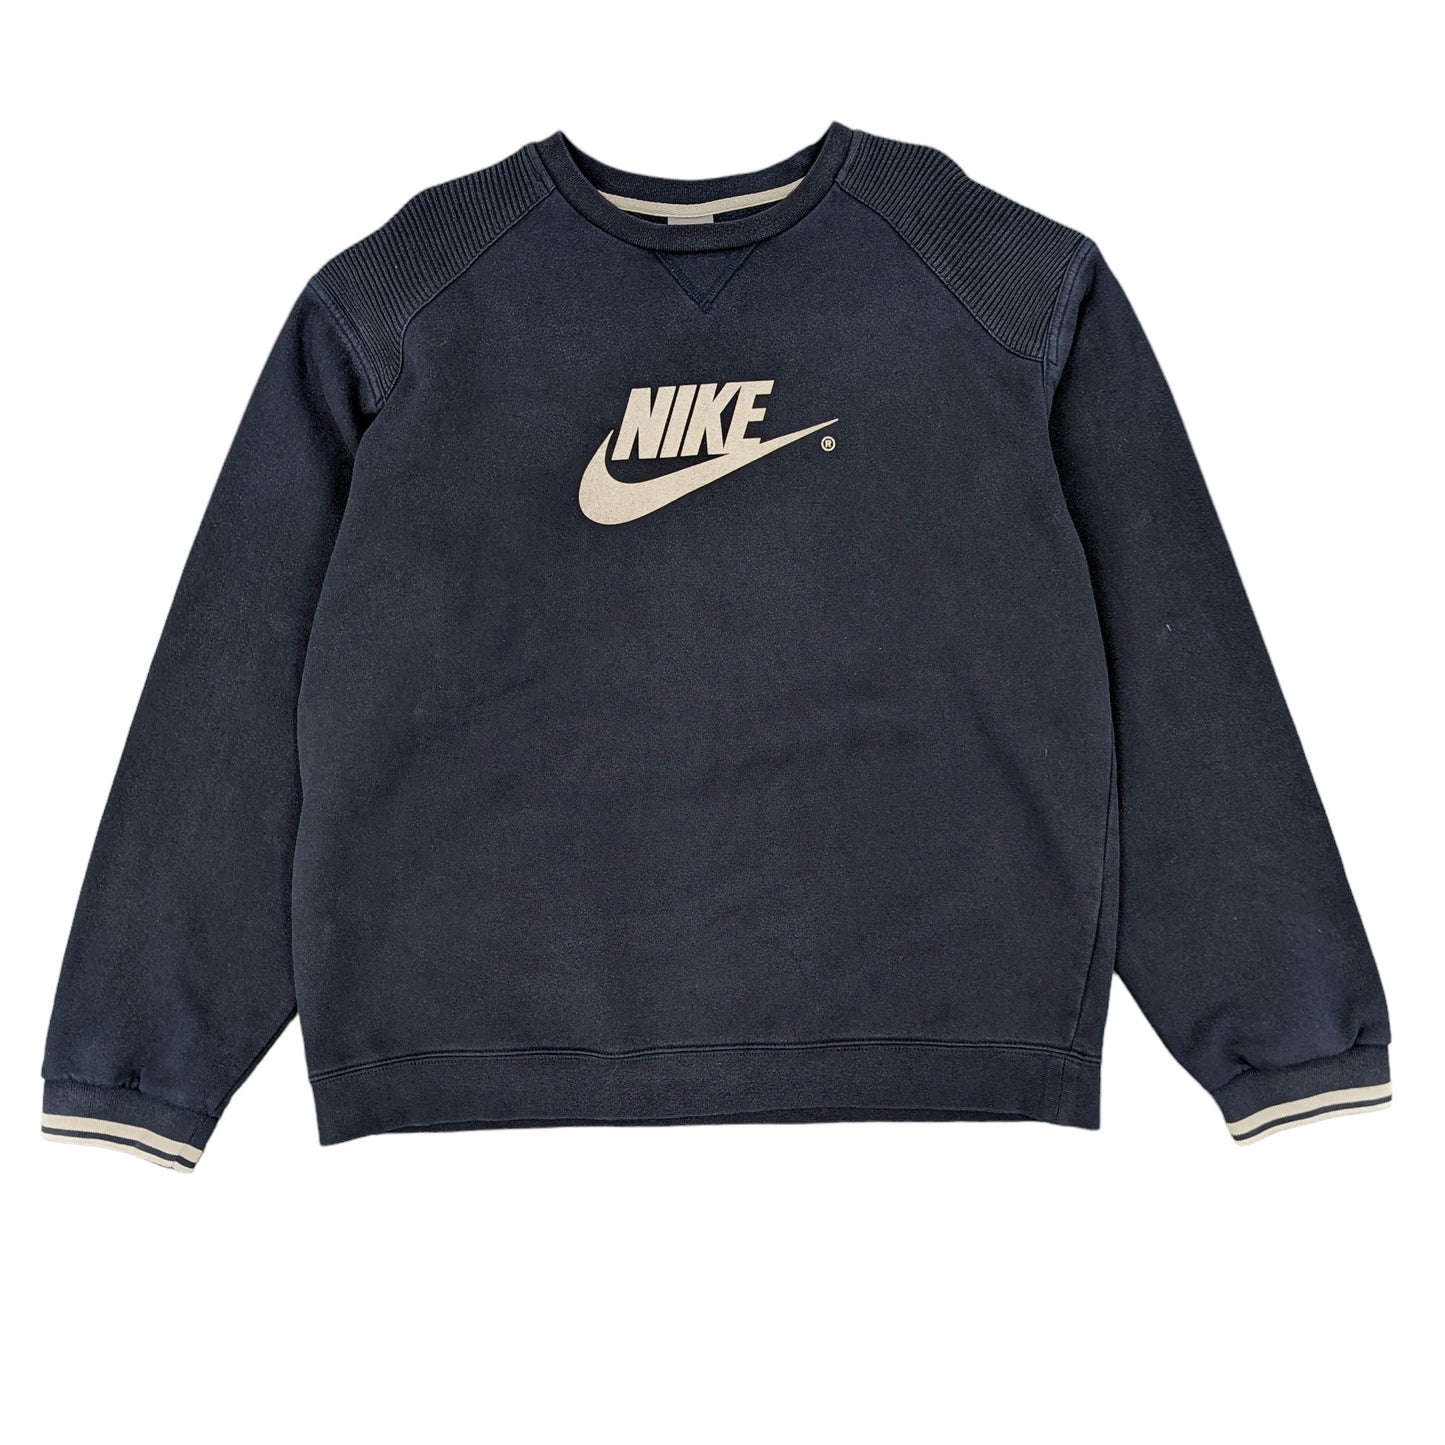 00s Nike Sweatshirt Size L